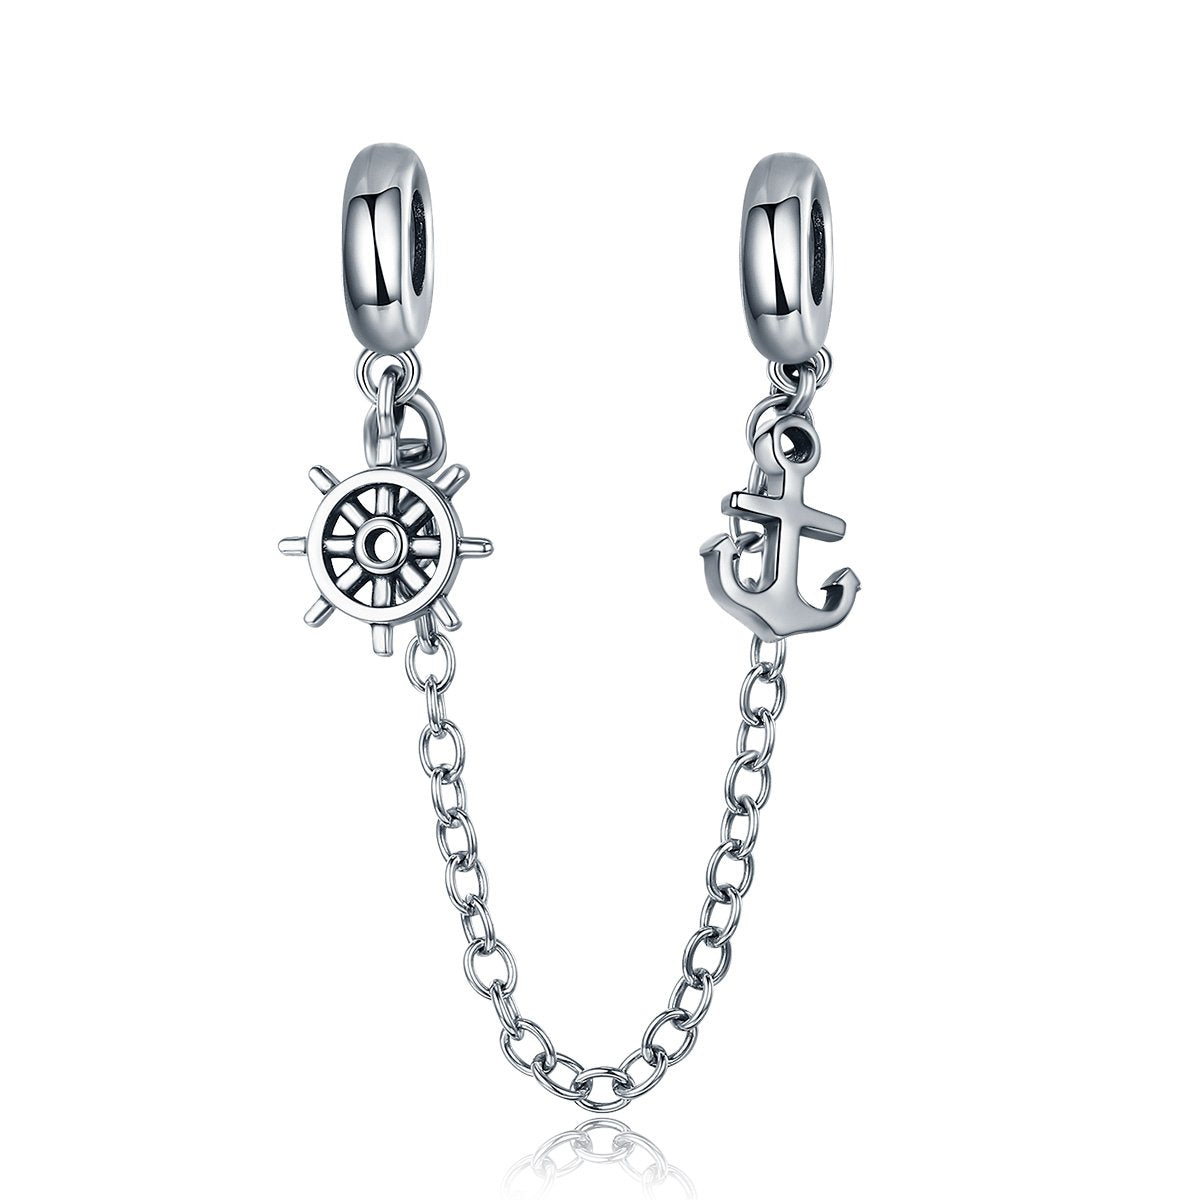 Sterling 925 silver charm the rudder n anchor secure chain bead pendant fits Pandora charm and European charm bracelet Xaxe.com